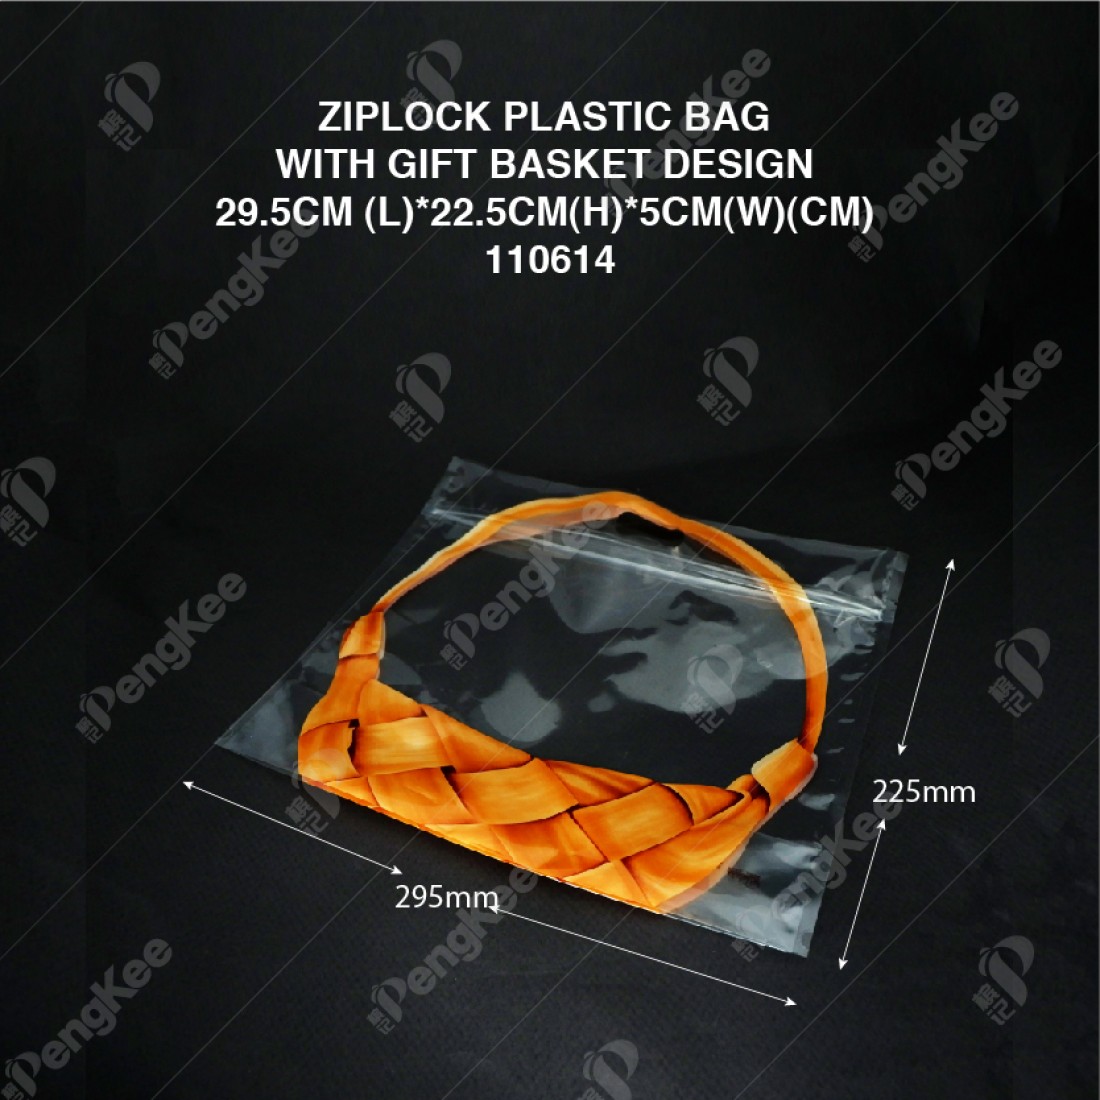 ZIPLOCK PLASTIC BAG WITH GIFT BASKET DESIGN 29.5CM (L)*22.5CM(H)*5CM(W)(CM) 100'S